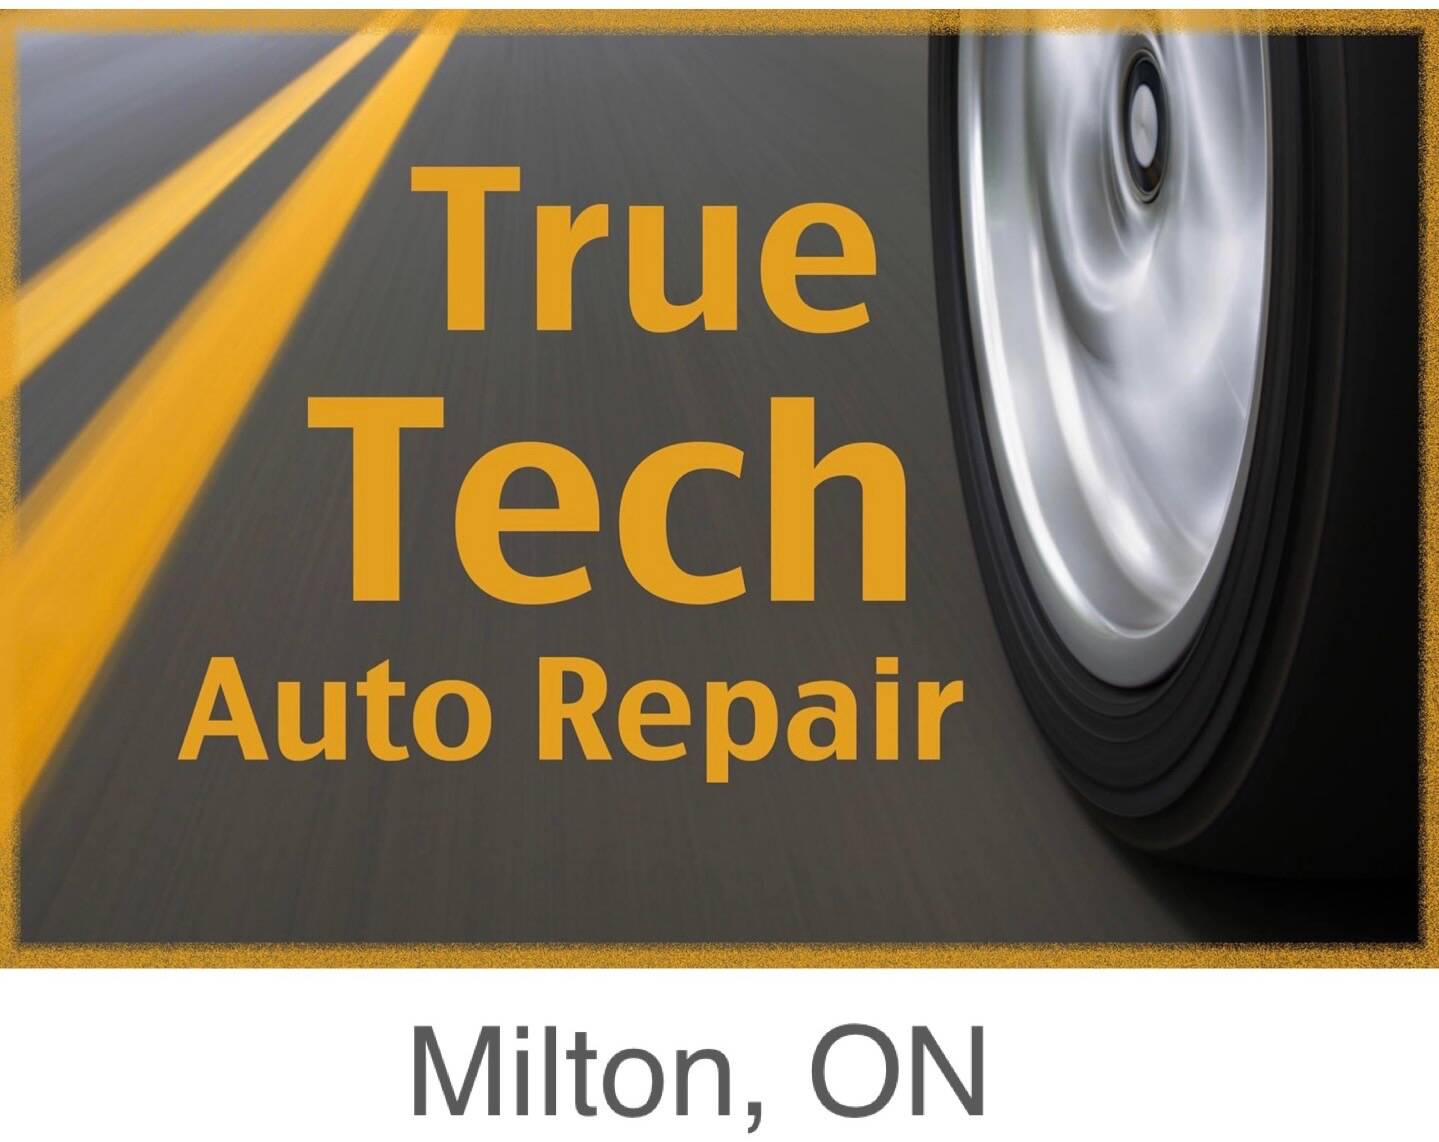 True Tech Auto Repair